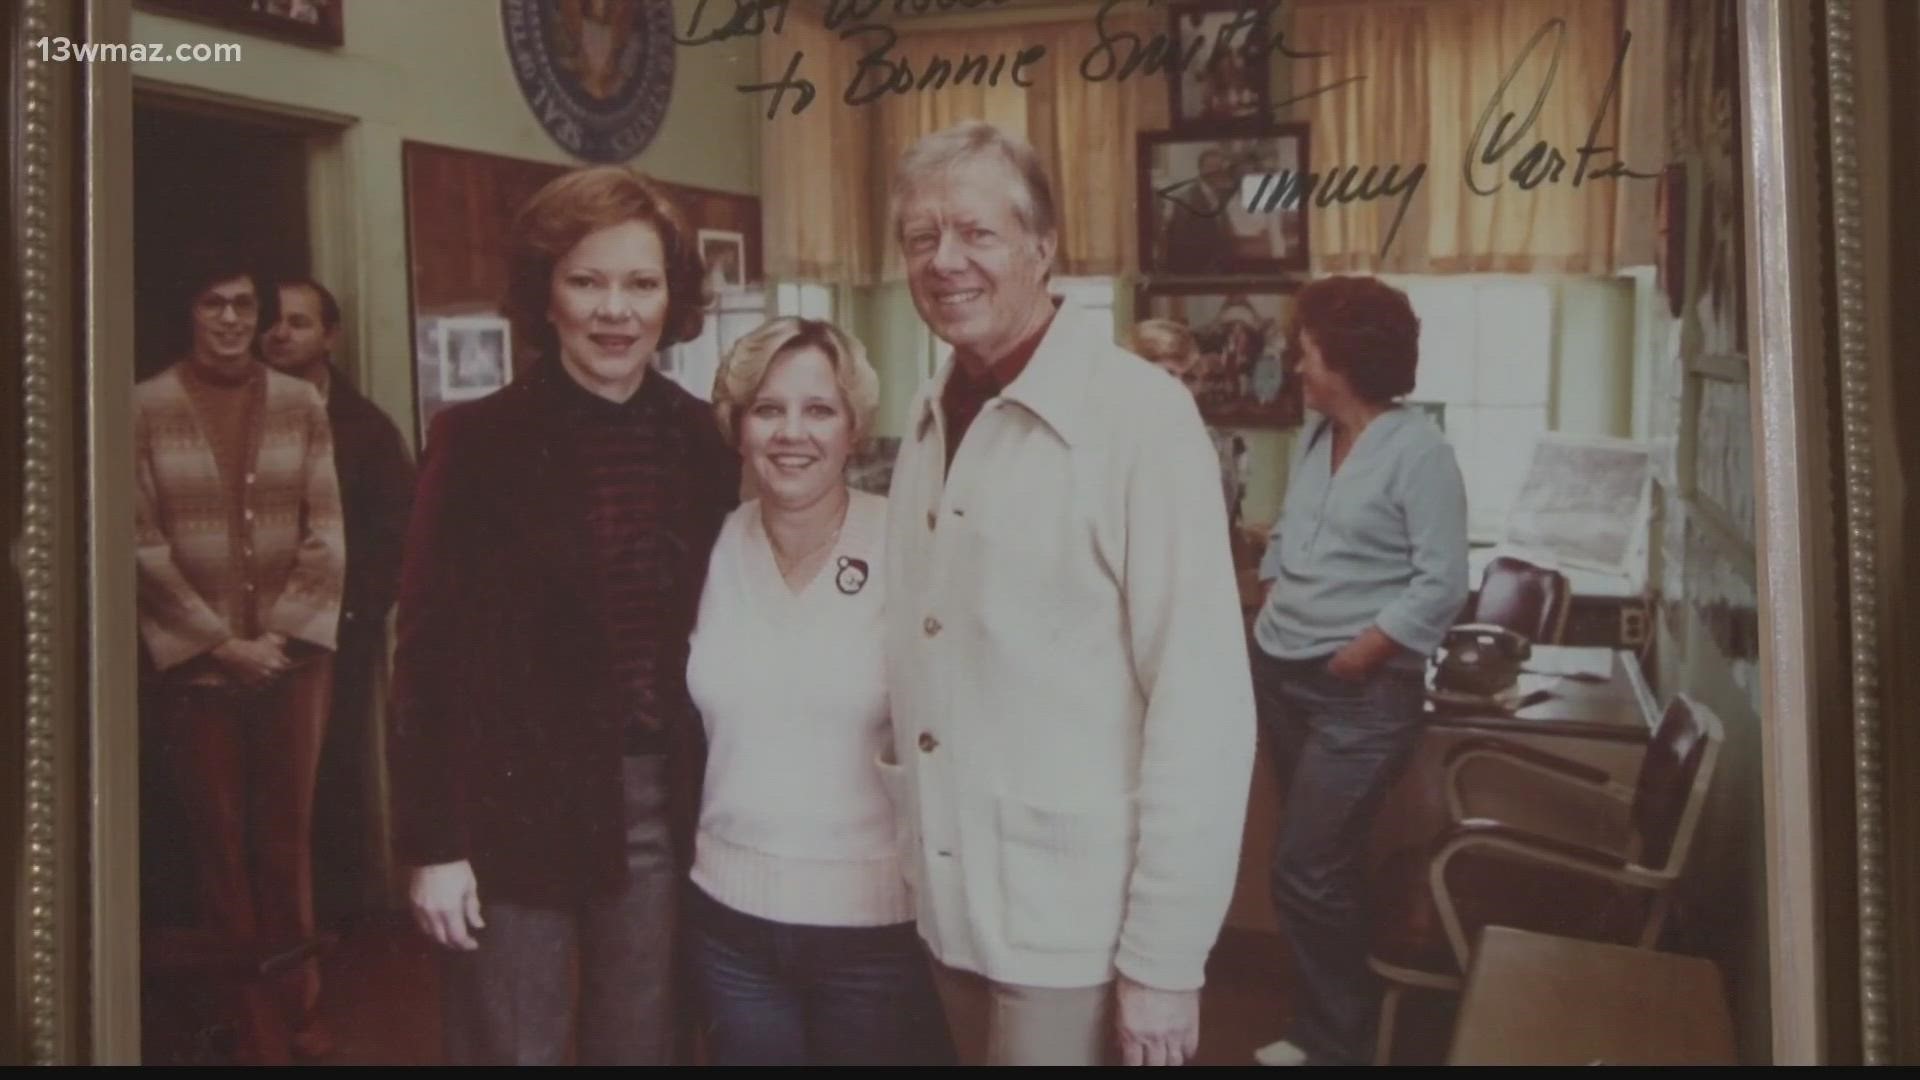 Gene Davis' wife battled cancer the same time as former President Carter.